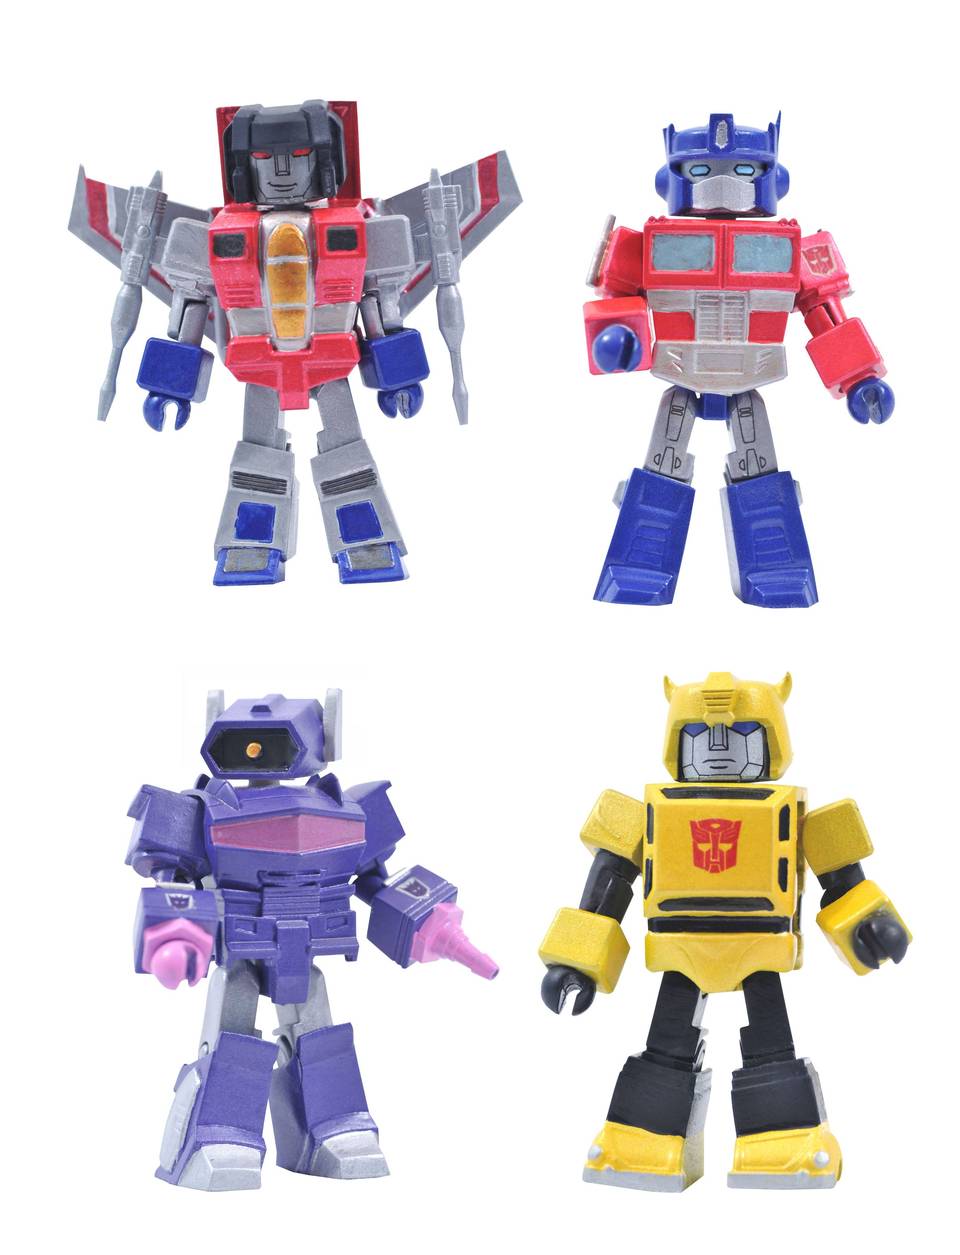 MiniMates Transformers Series 1 Set of 4 Action Figure